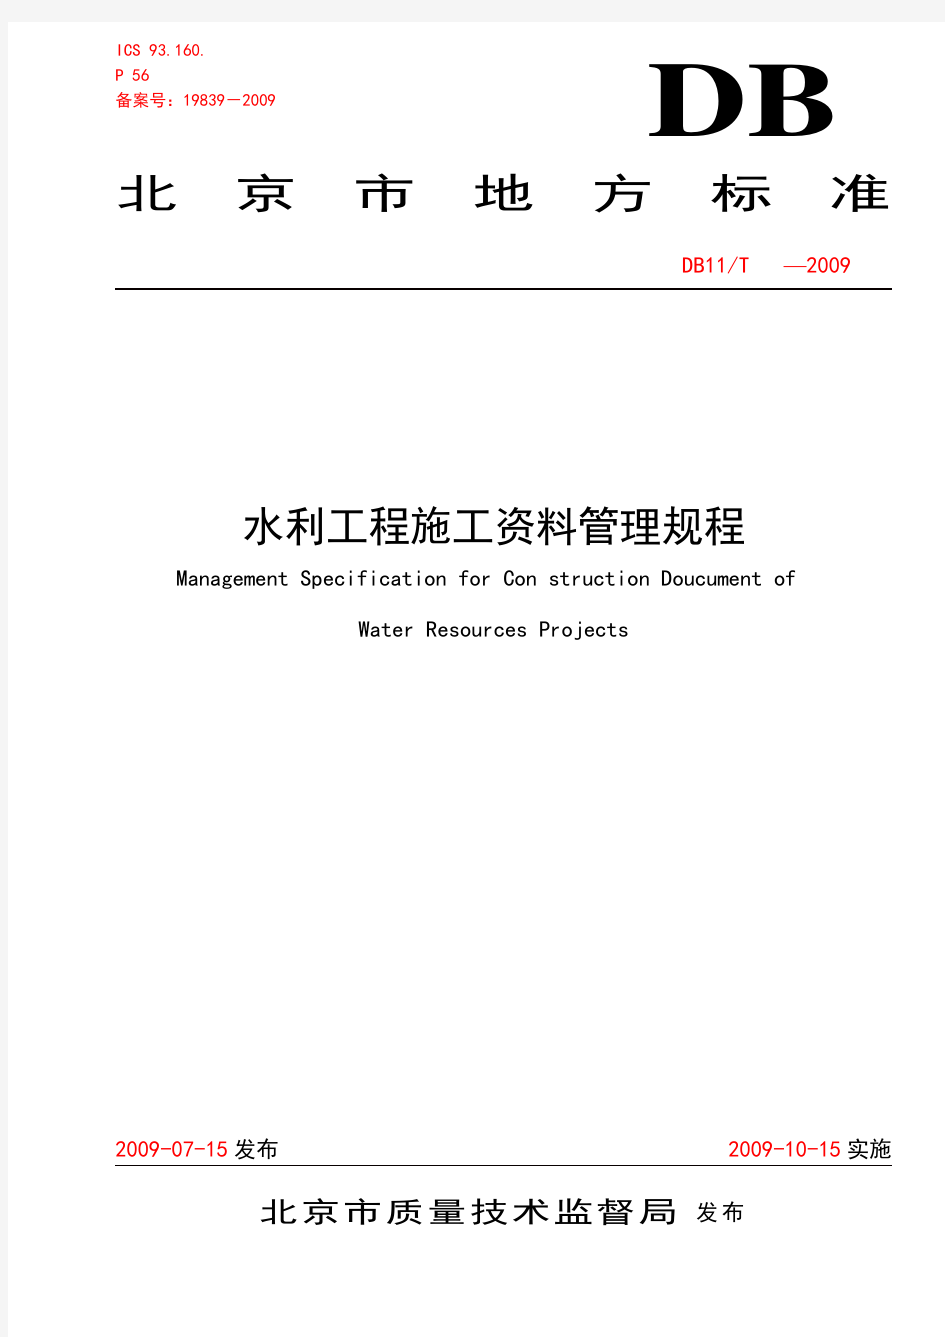 DB11T 387—2009 北京地方标准 水利工程施工资料管理规程